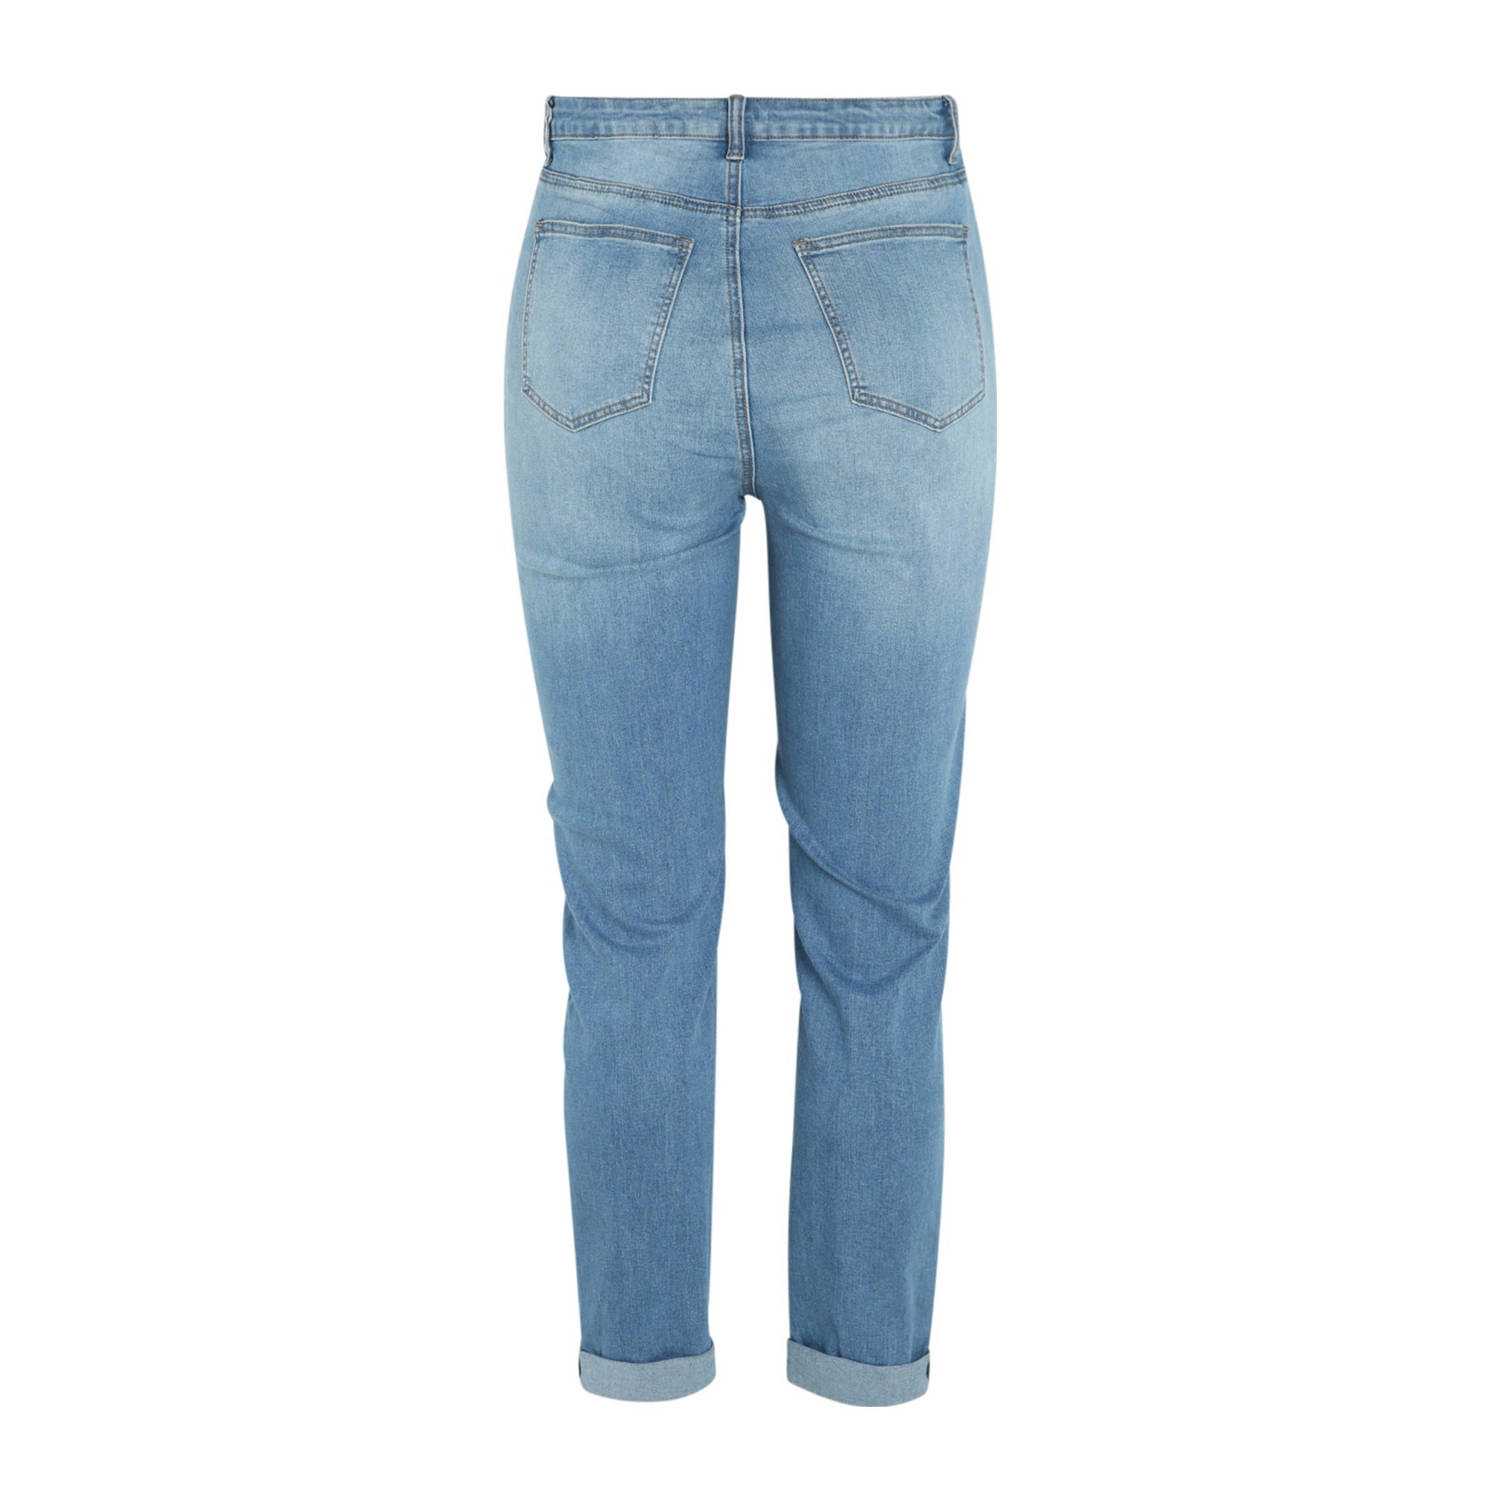 Paprika regular jeans medium blue denim